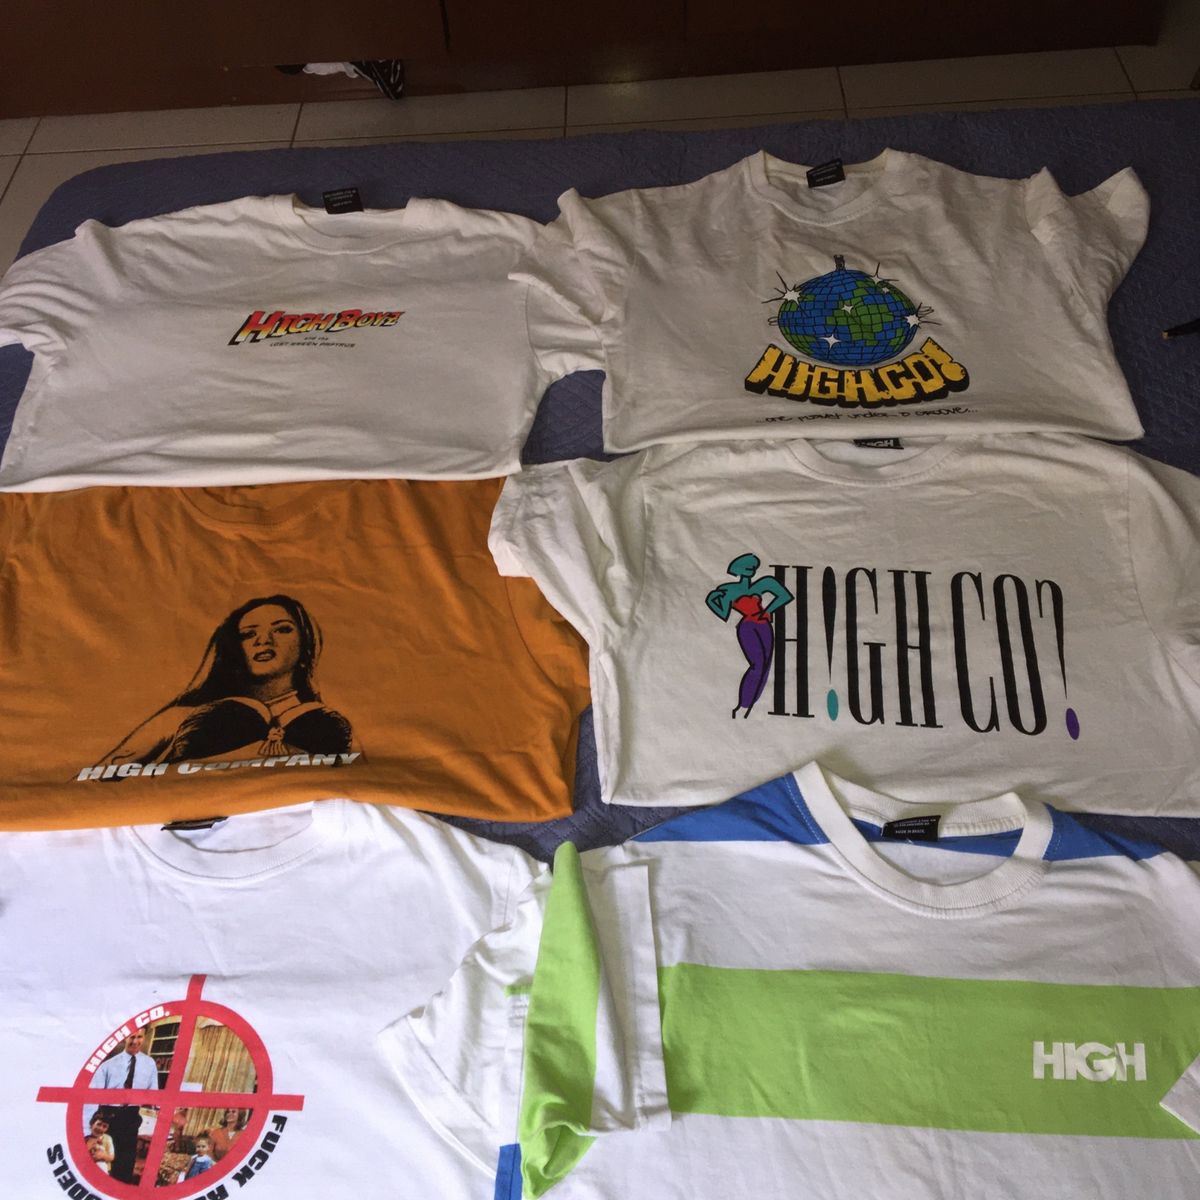 Camisetas High Company, high 